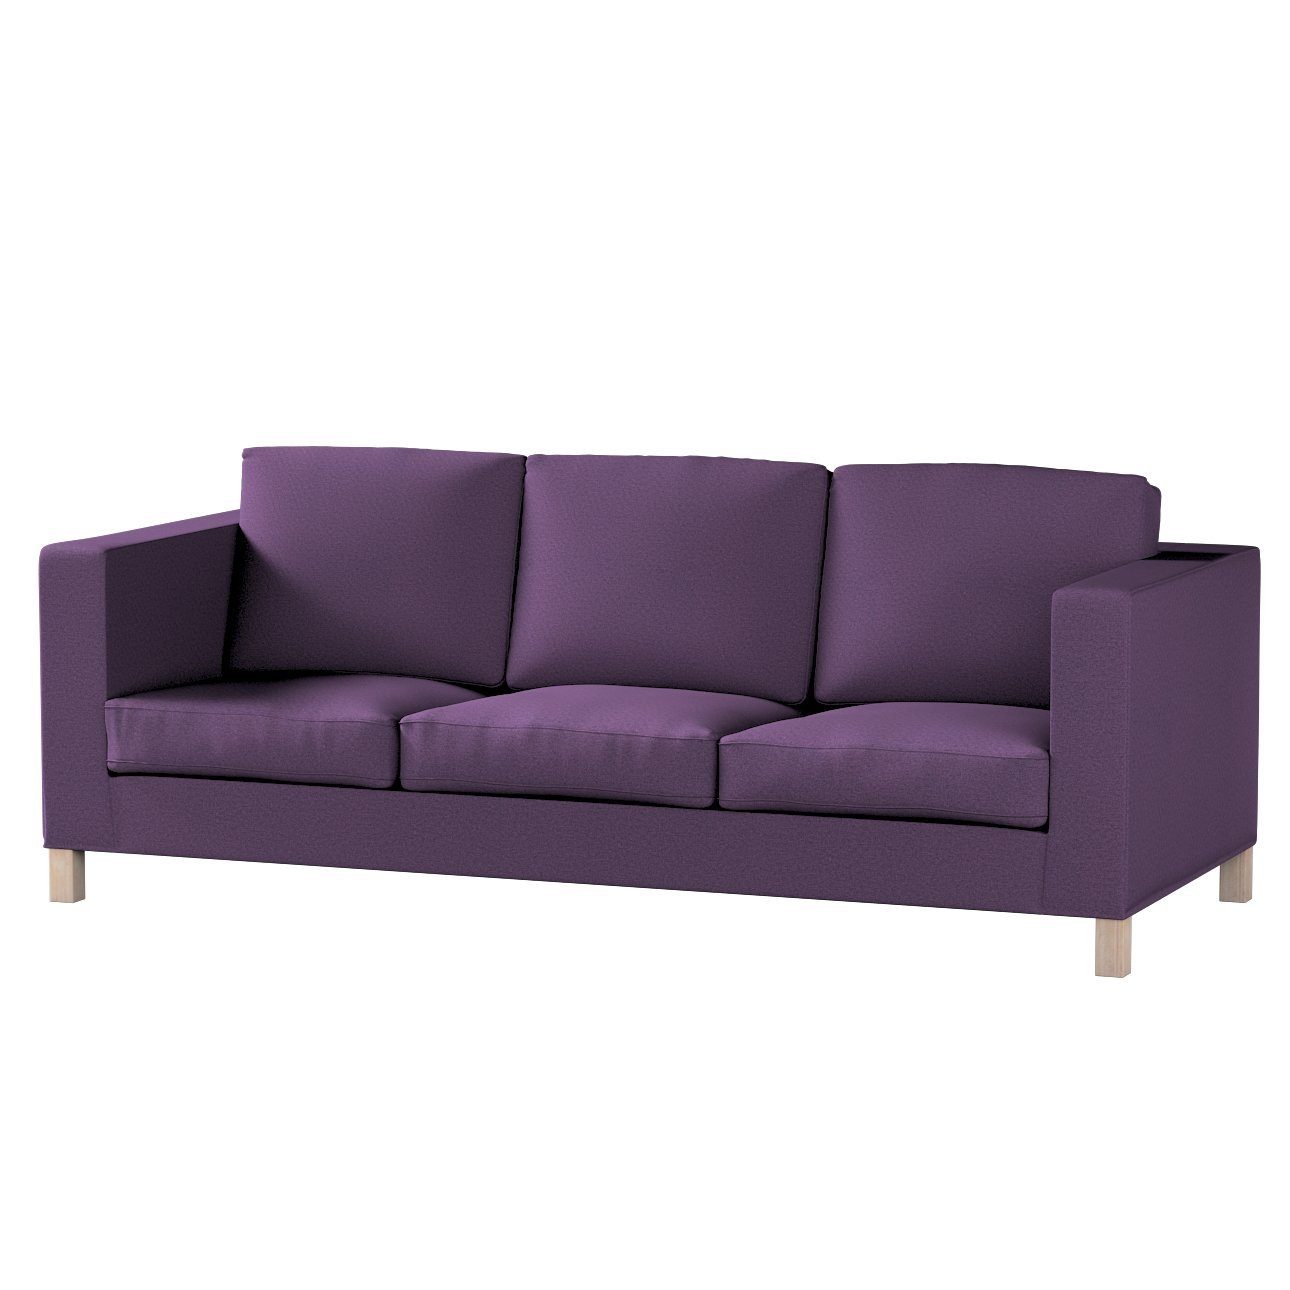 Sofahusse Karlanda 3-Sitzer Sofa nicht ausklappbar kurz, Etna, Dekoria violett